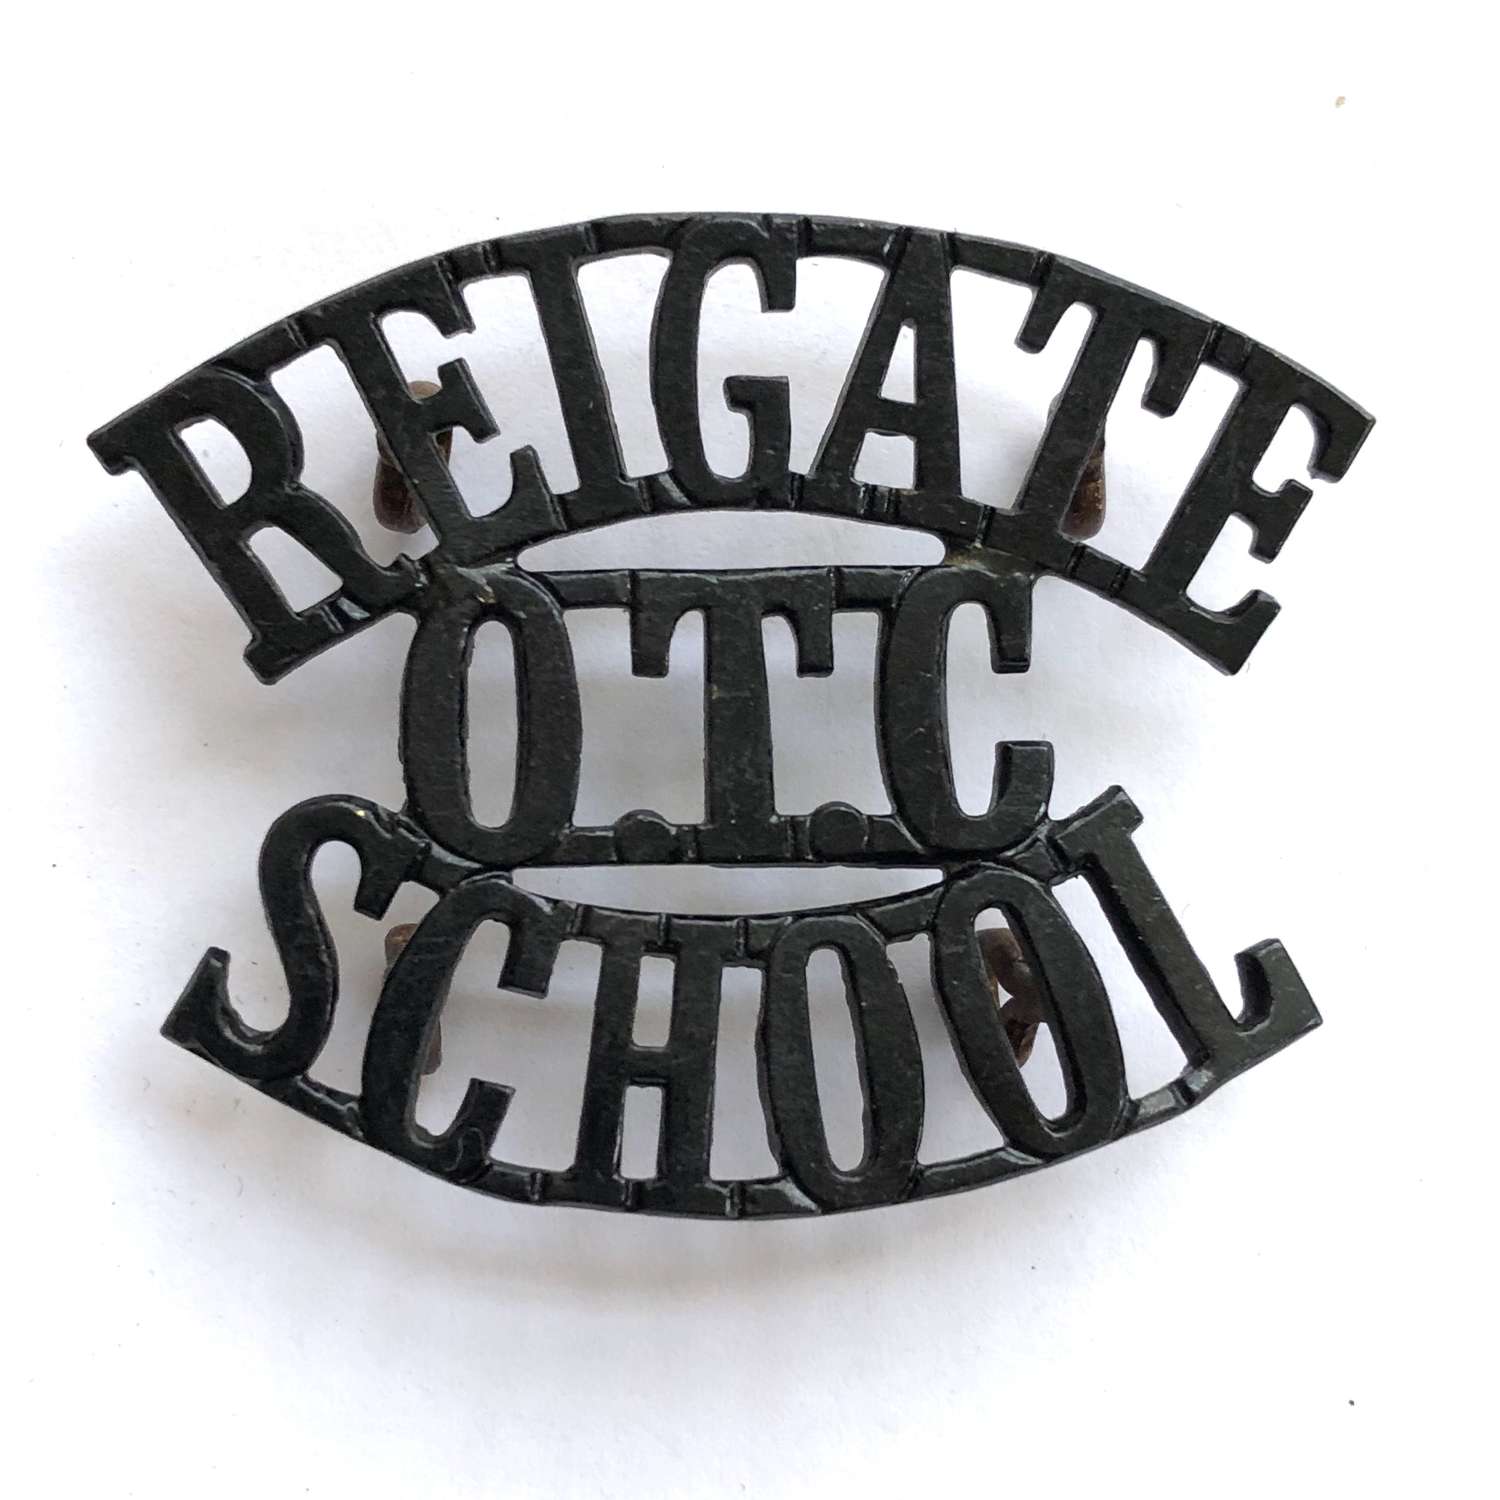 REIGATE /OTC / SCHOOL Surrey shoulder title circa 1908-40